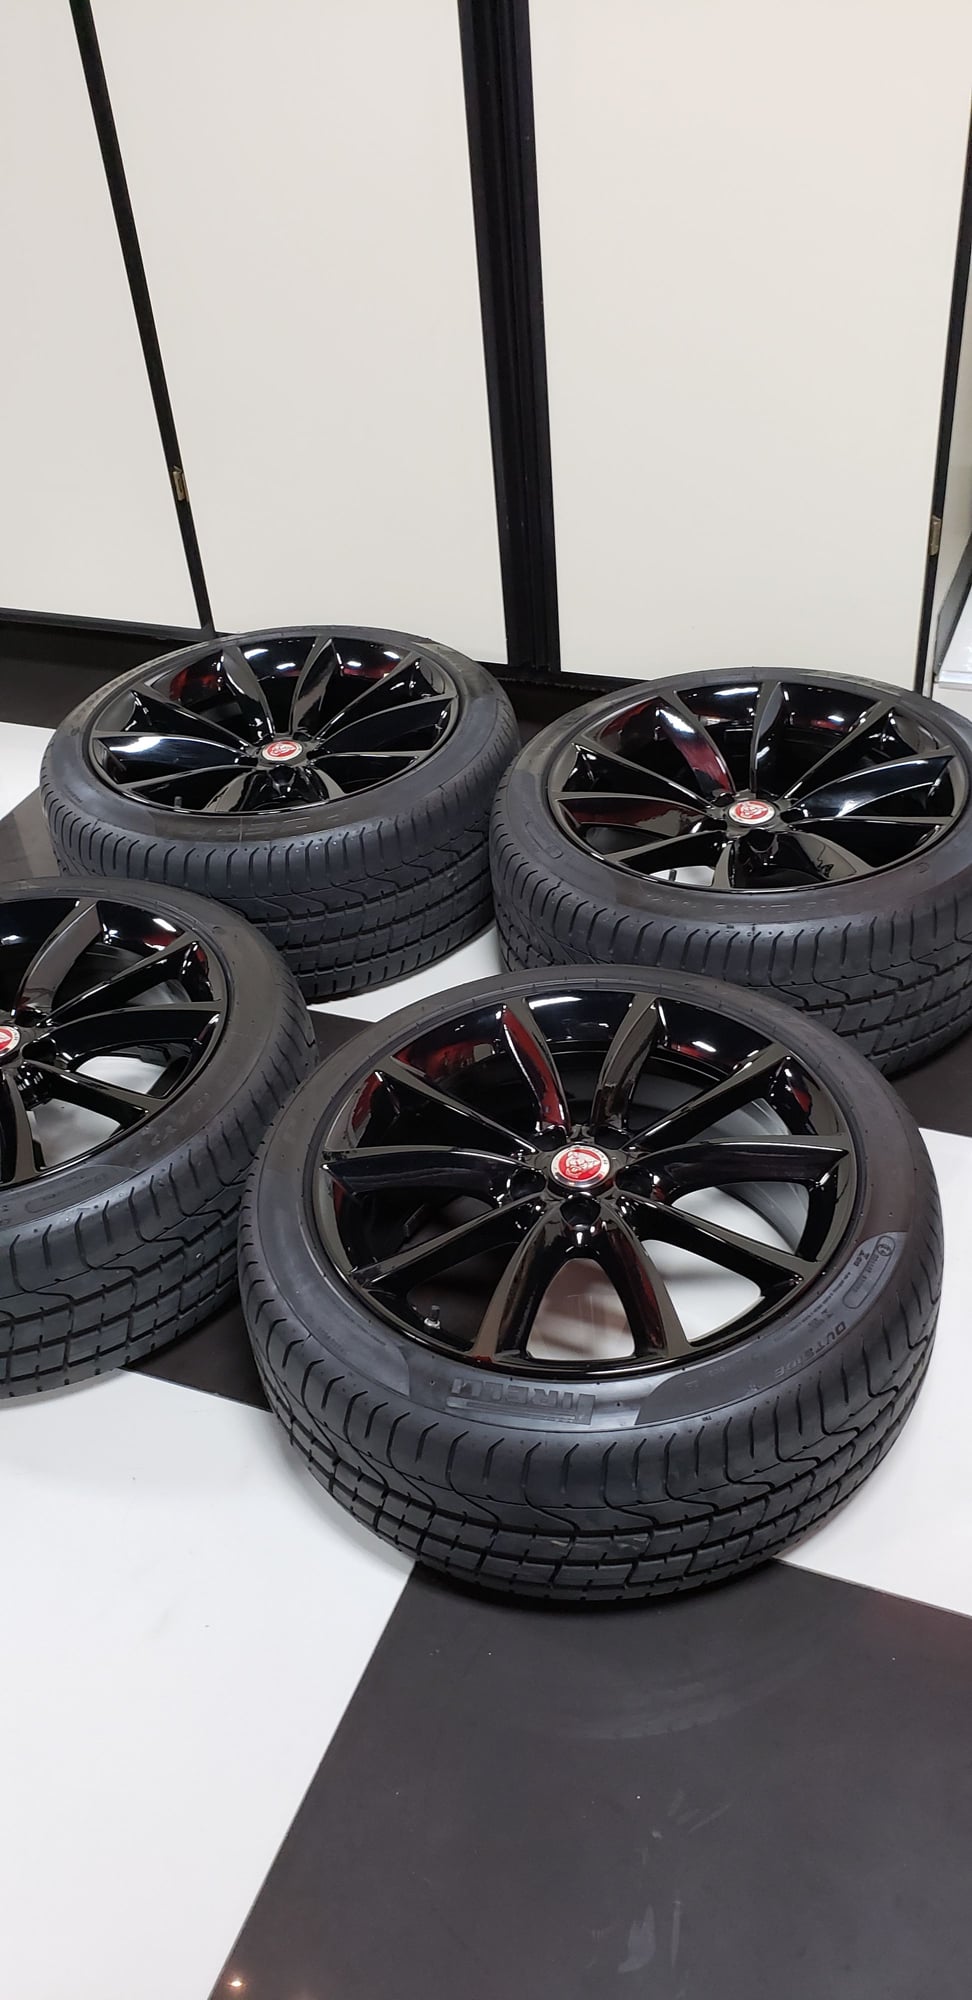 Wheels and Tires/Axles - 19" Factory OEM Jaguar FTYPE WHEELS RIMS AND NEW TIRES - New - 2014 to 2019 Jaguar F-Type - Sacramento, CA 95763, United States